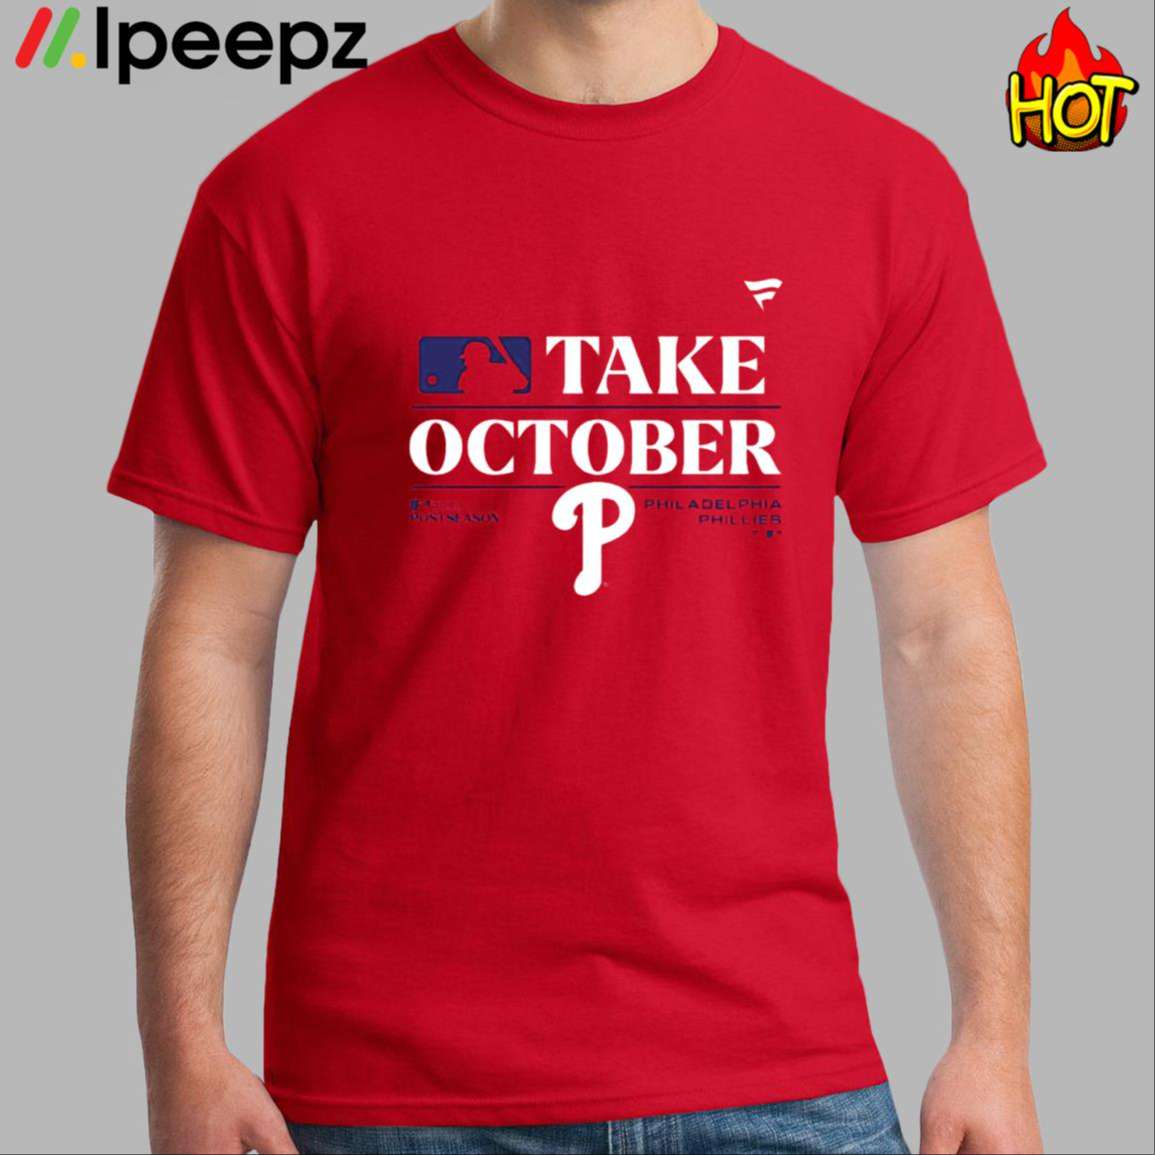 Philadelphia Phillies Red October 2023 Postseason Shirt